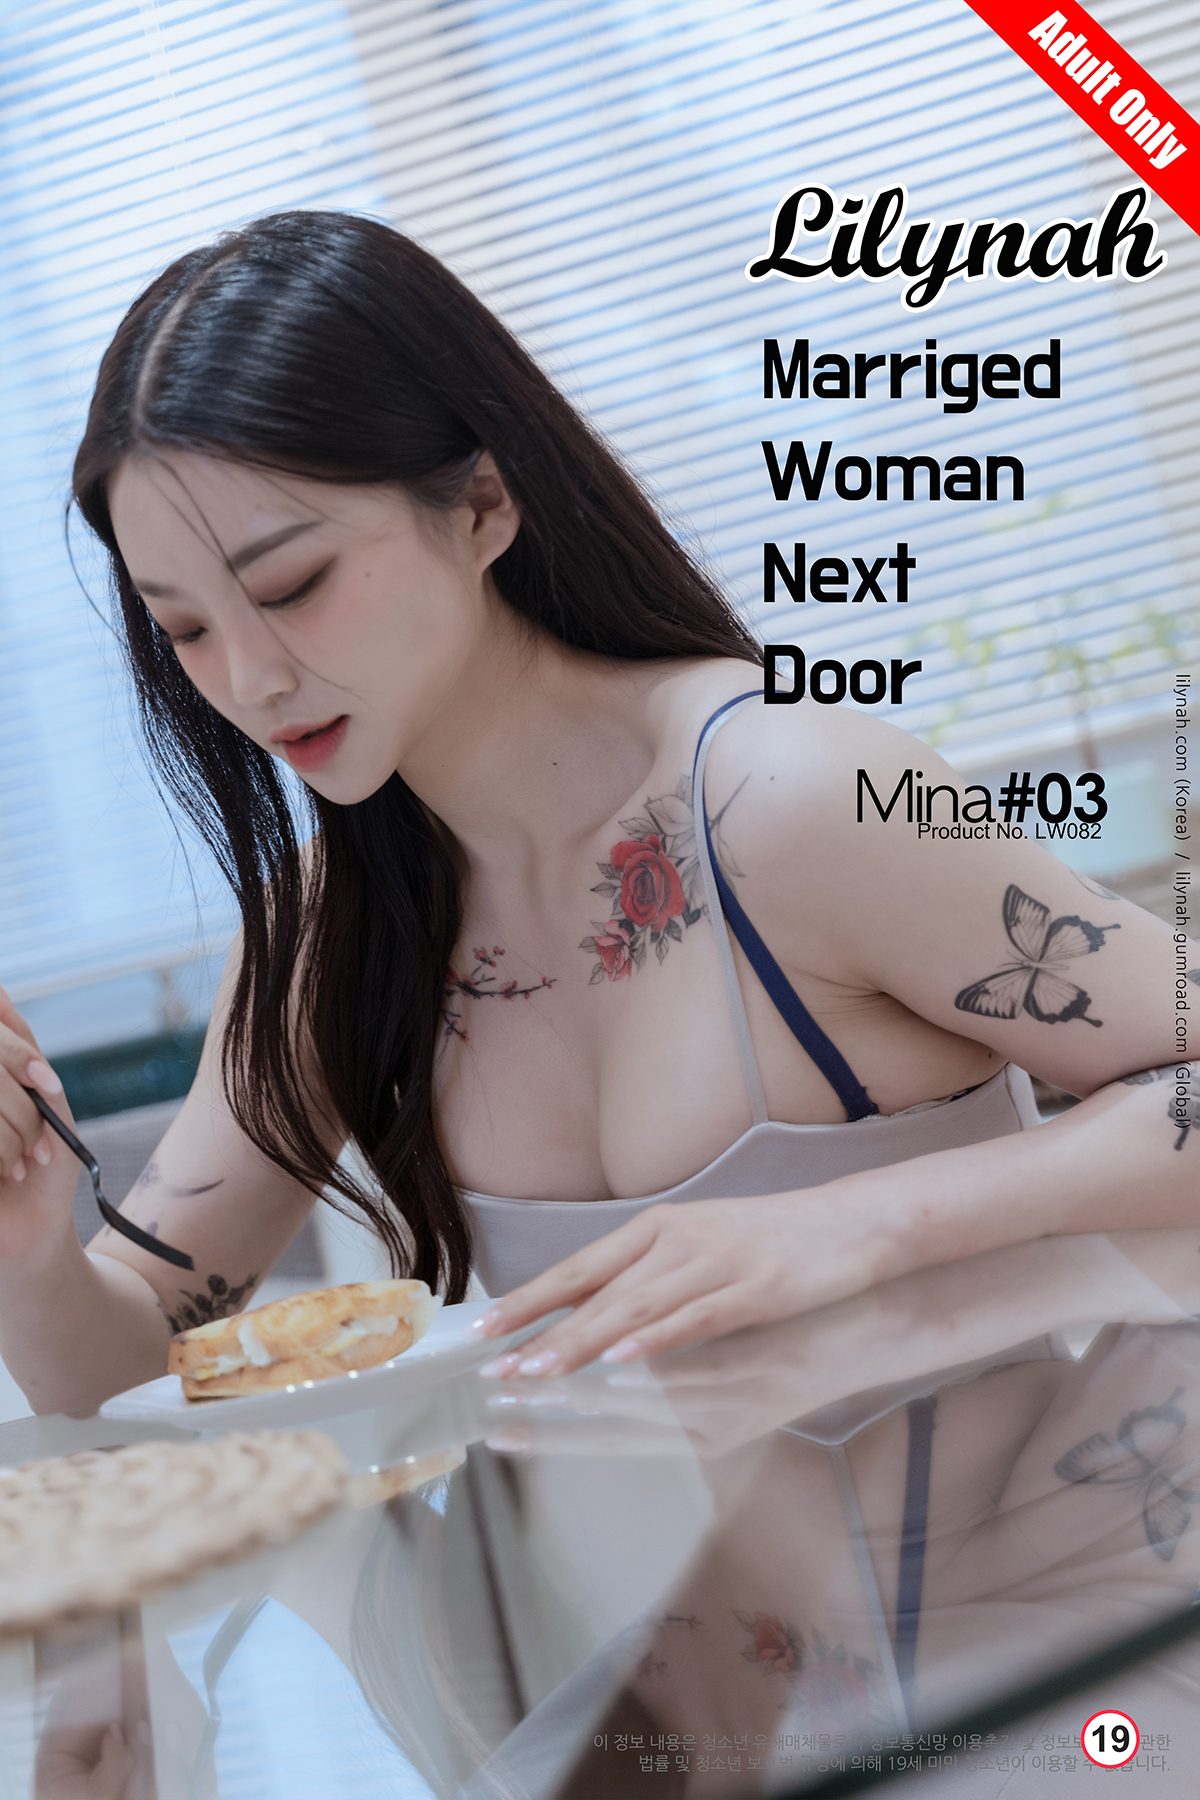 Lilynah Lw082 Mina 민아 Vol.03 – Marriged Woman Next Door